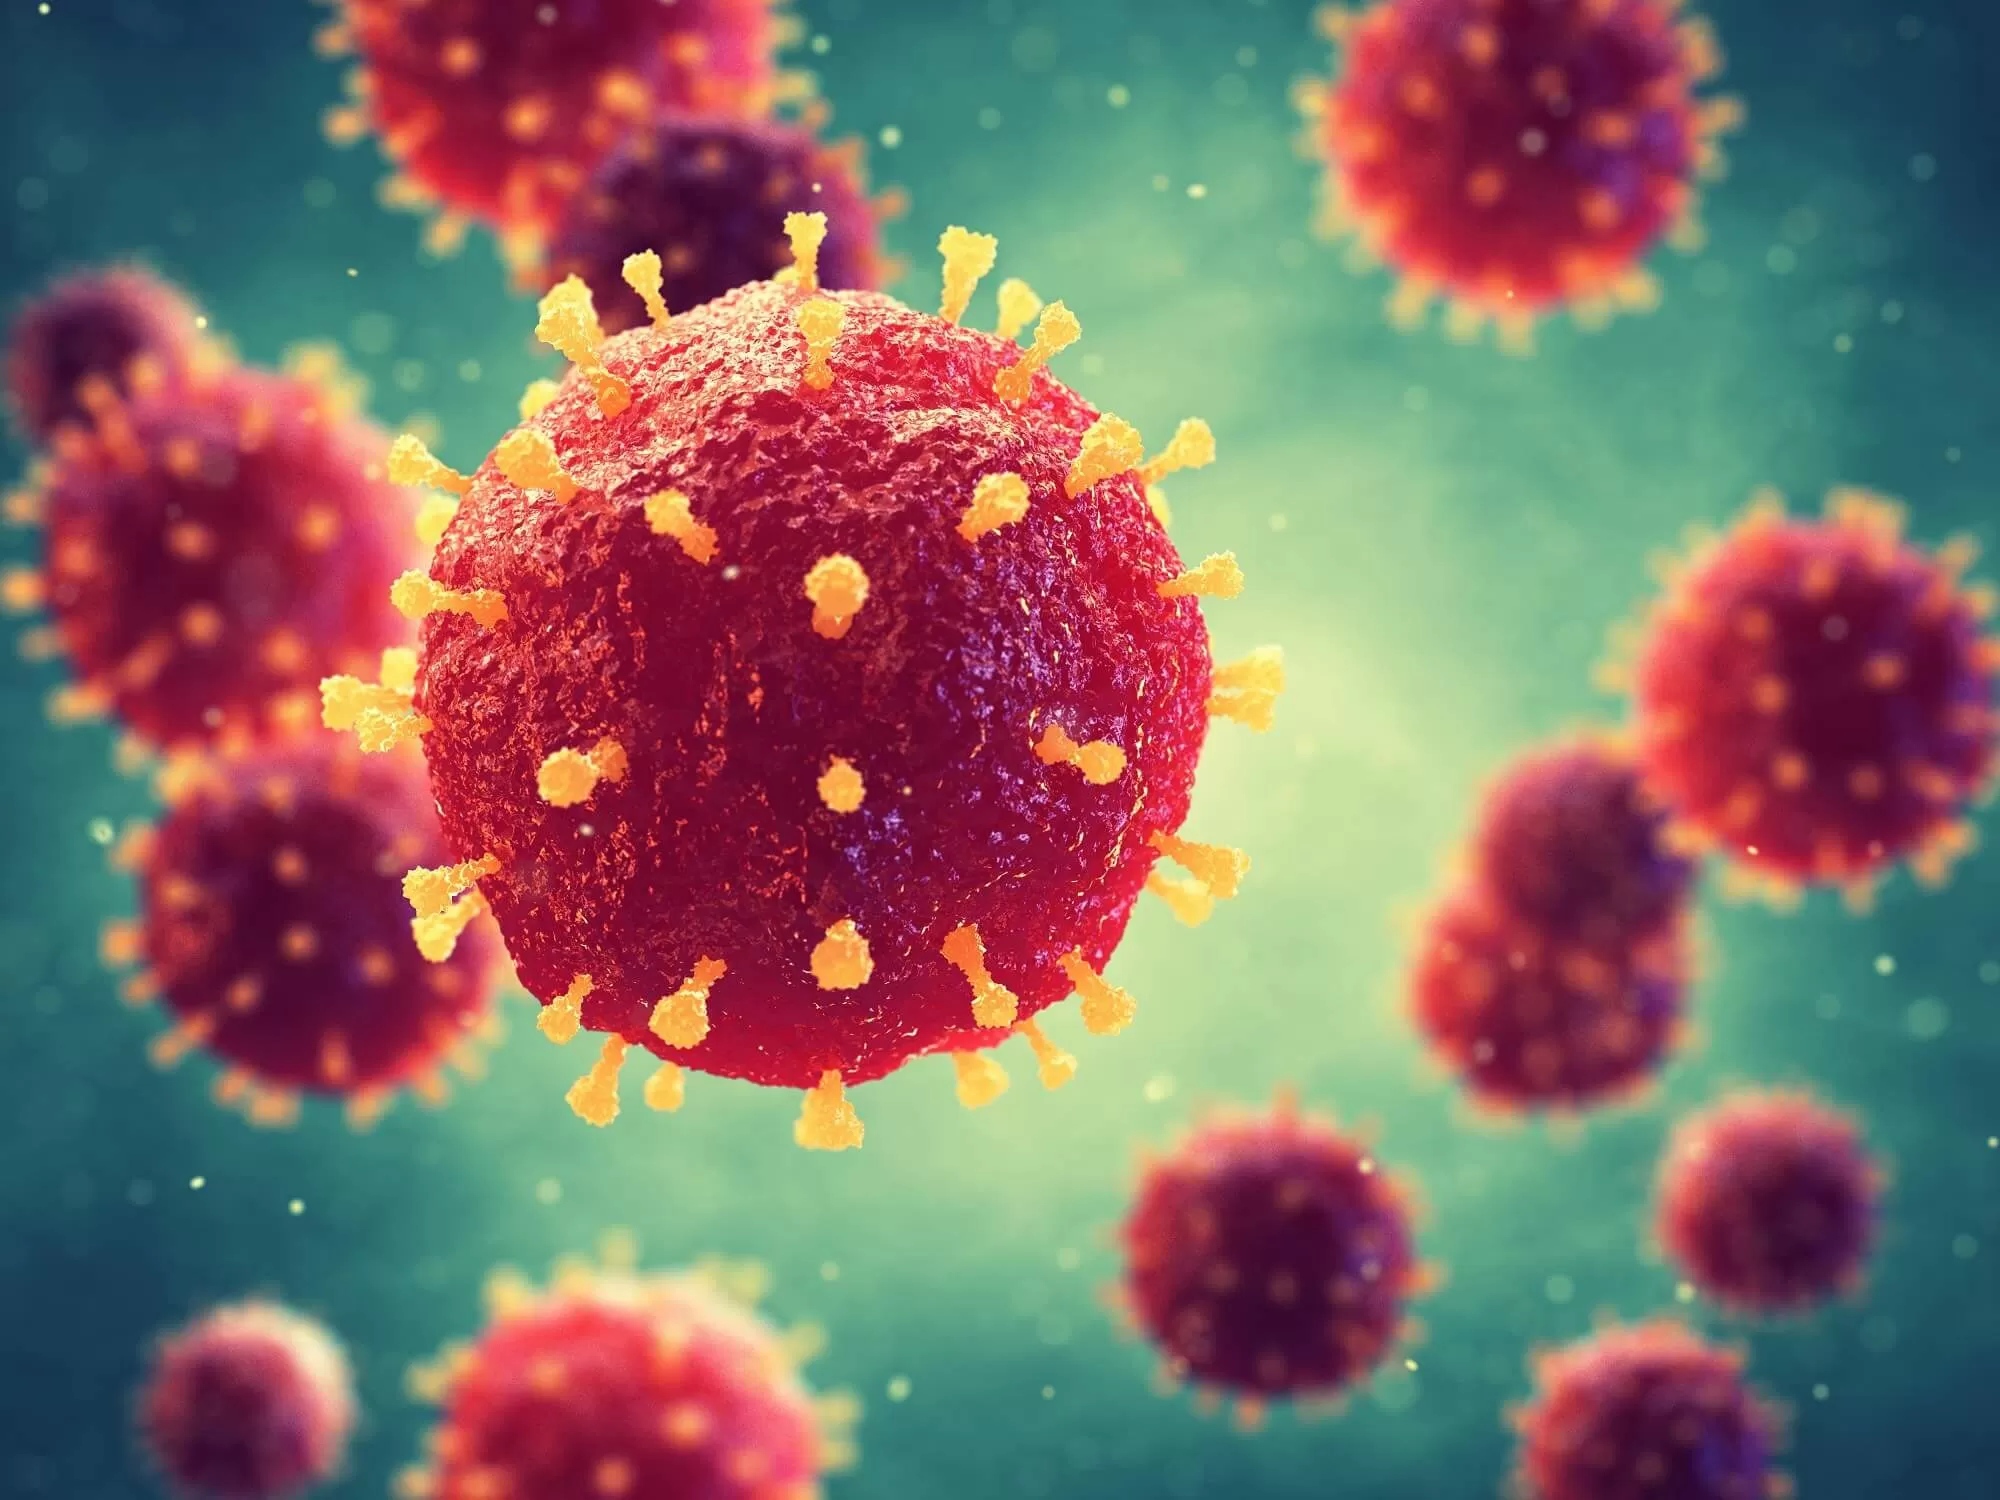 Coronavirus fears exploited to spread malware